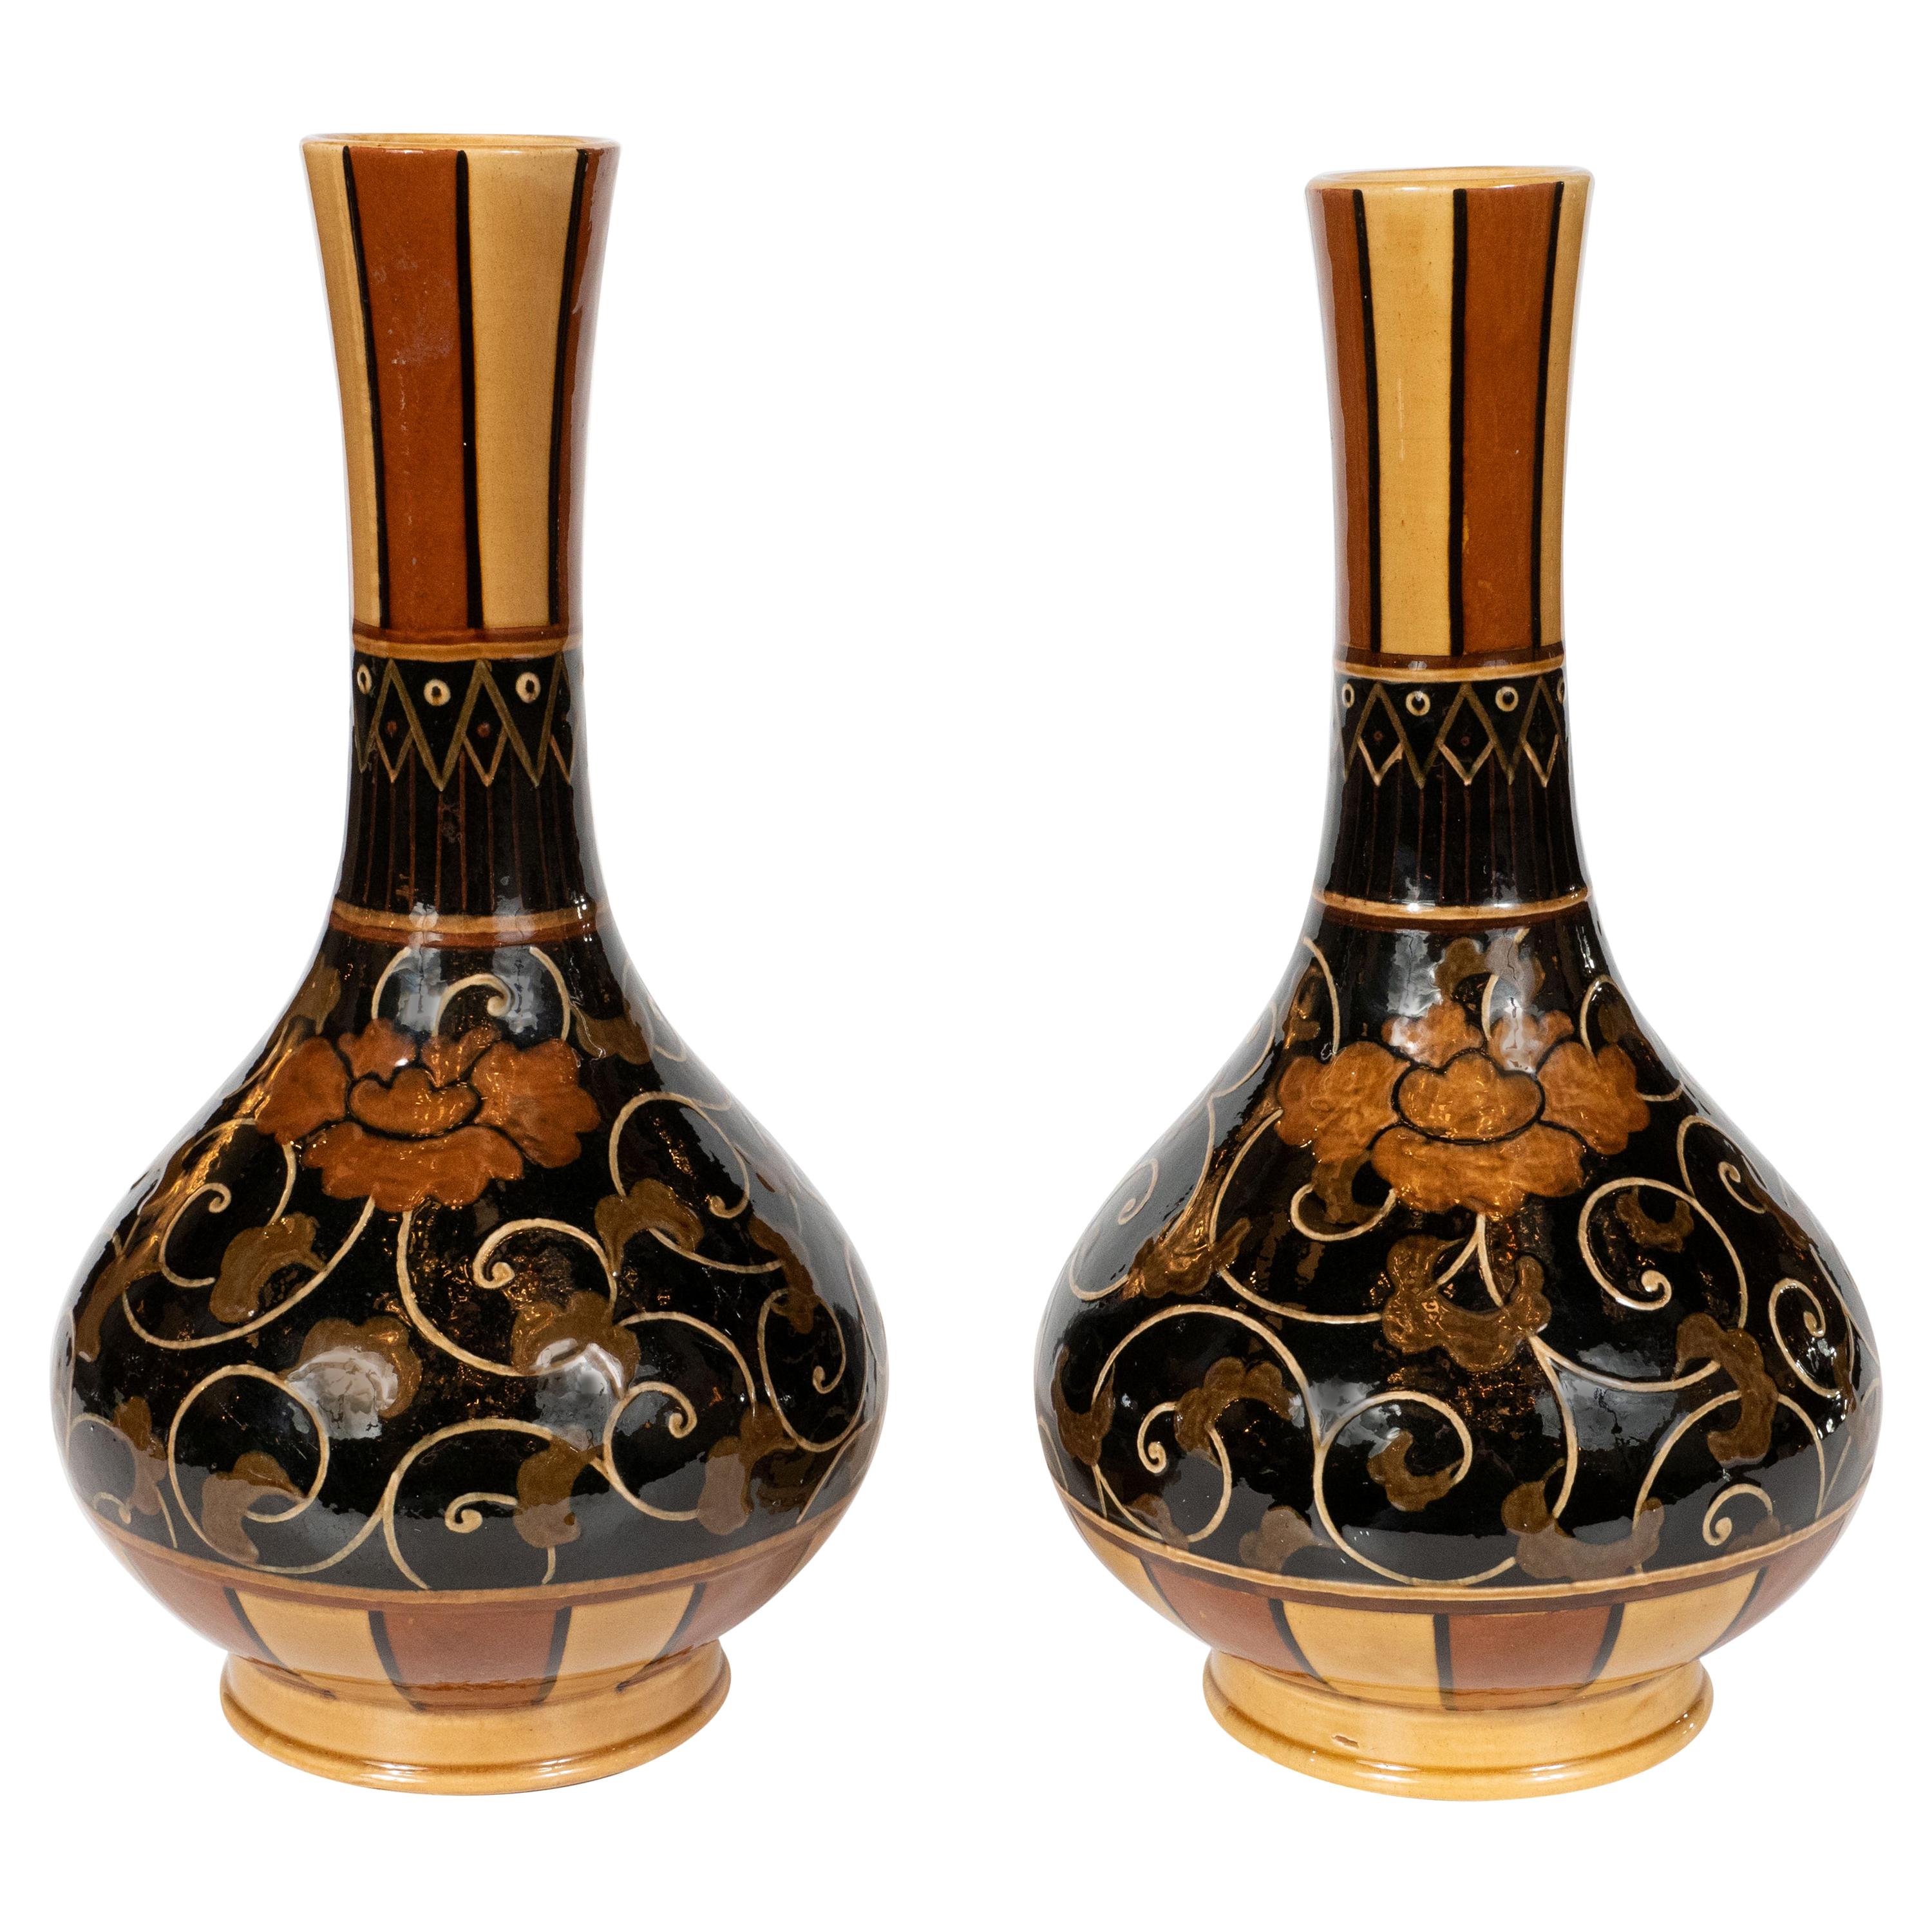 Pair of Art Nouveau 19th Century Wedgewood Marsden Vases with Foliate Designs